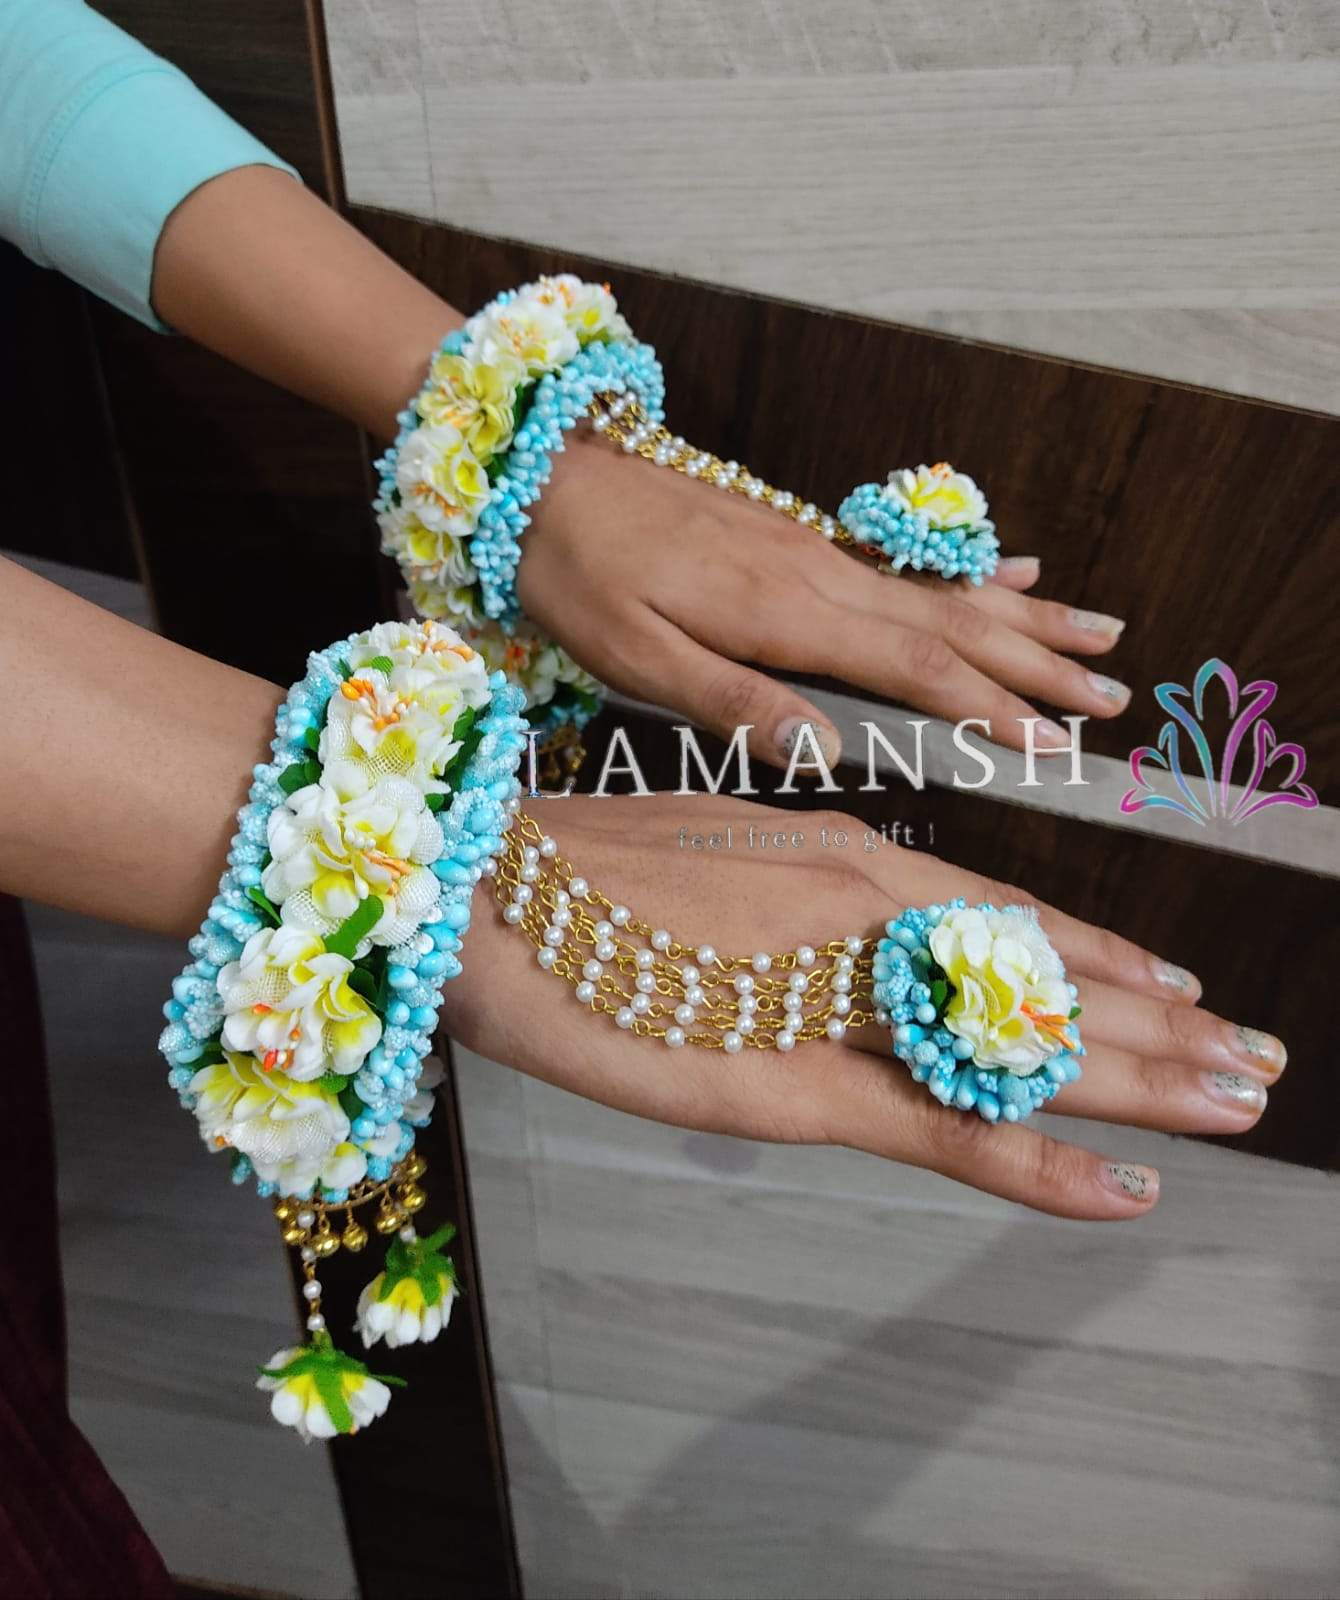 Lamansh Bracelet Ring Set SkyBlue-off White / Artificial flowers / Haldi ,Wedding,Engagement Lamansh™ Floral Ring Bracelet Set for Engagement / Haldi / Floral Accessories set